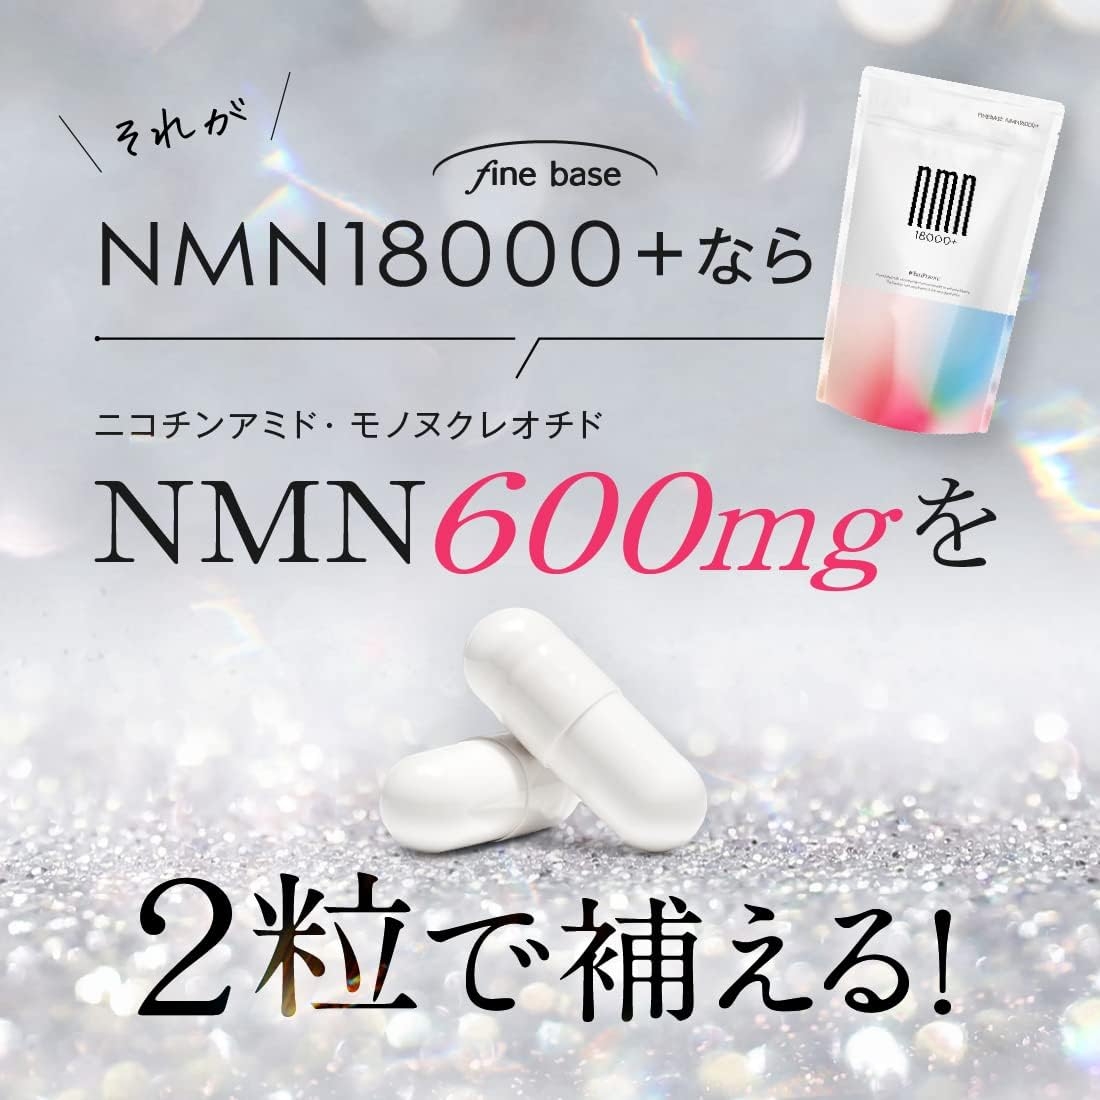 finebase(ファインベース) NMN 18000+の商品画像3 